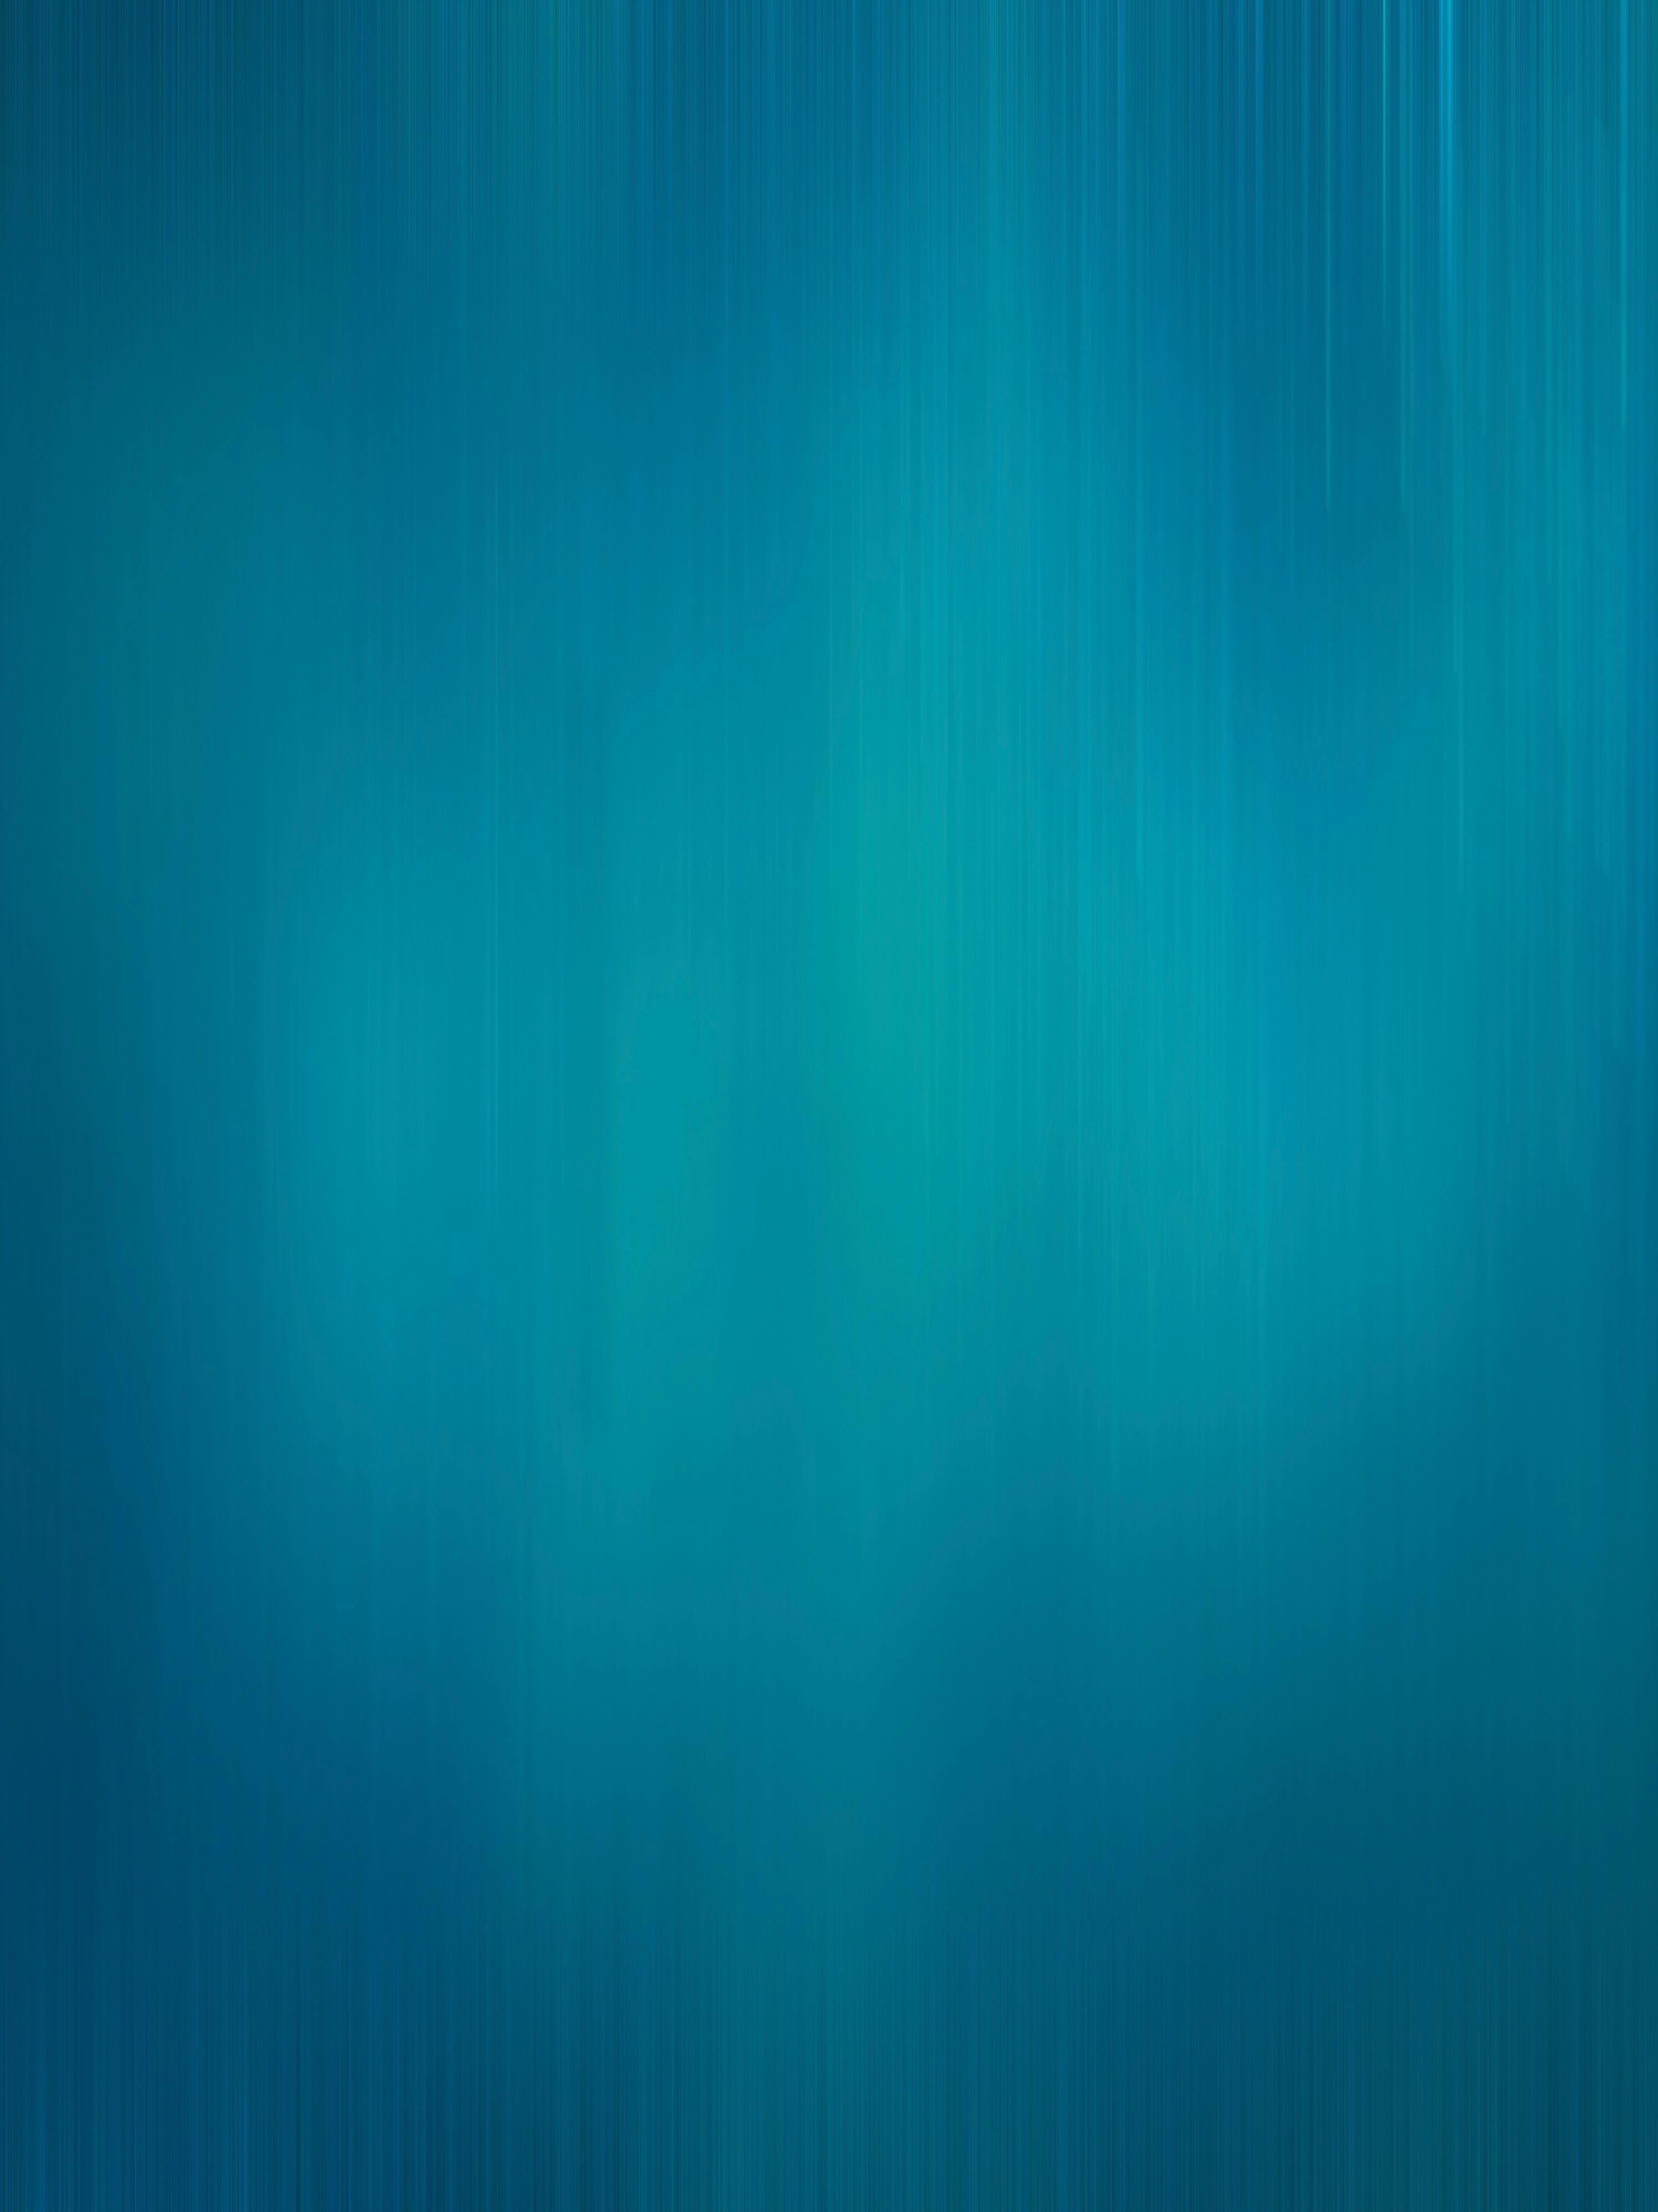 Blue Wallpaper · Free Stock Photo